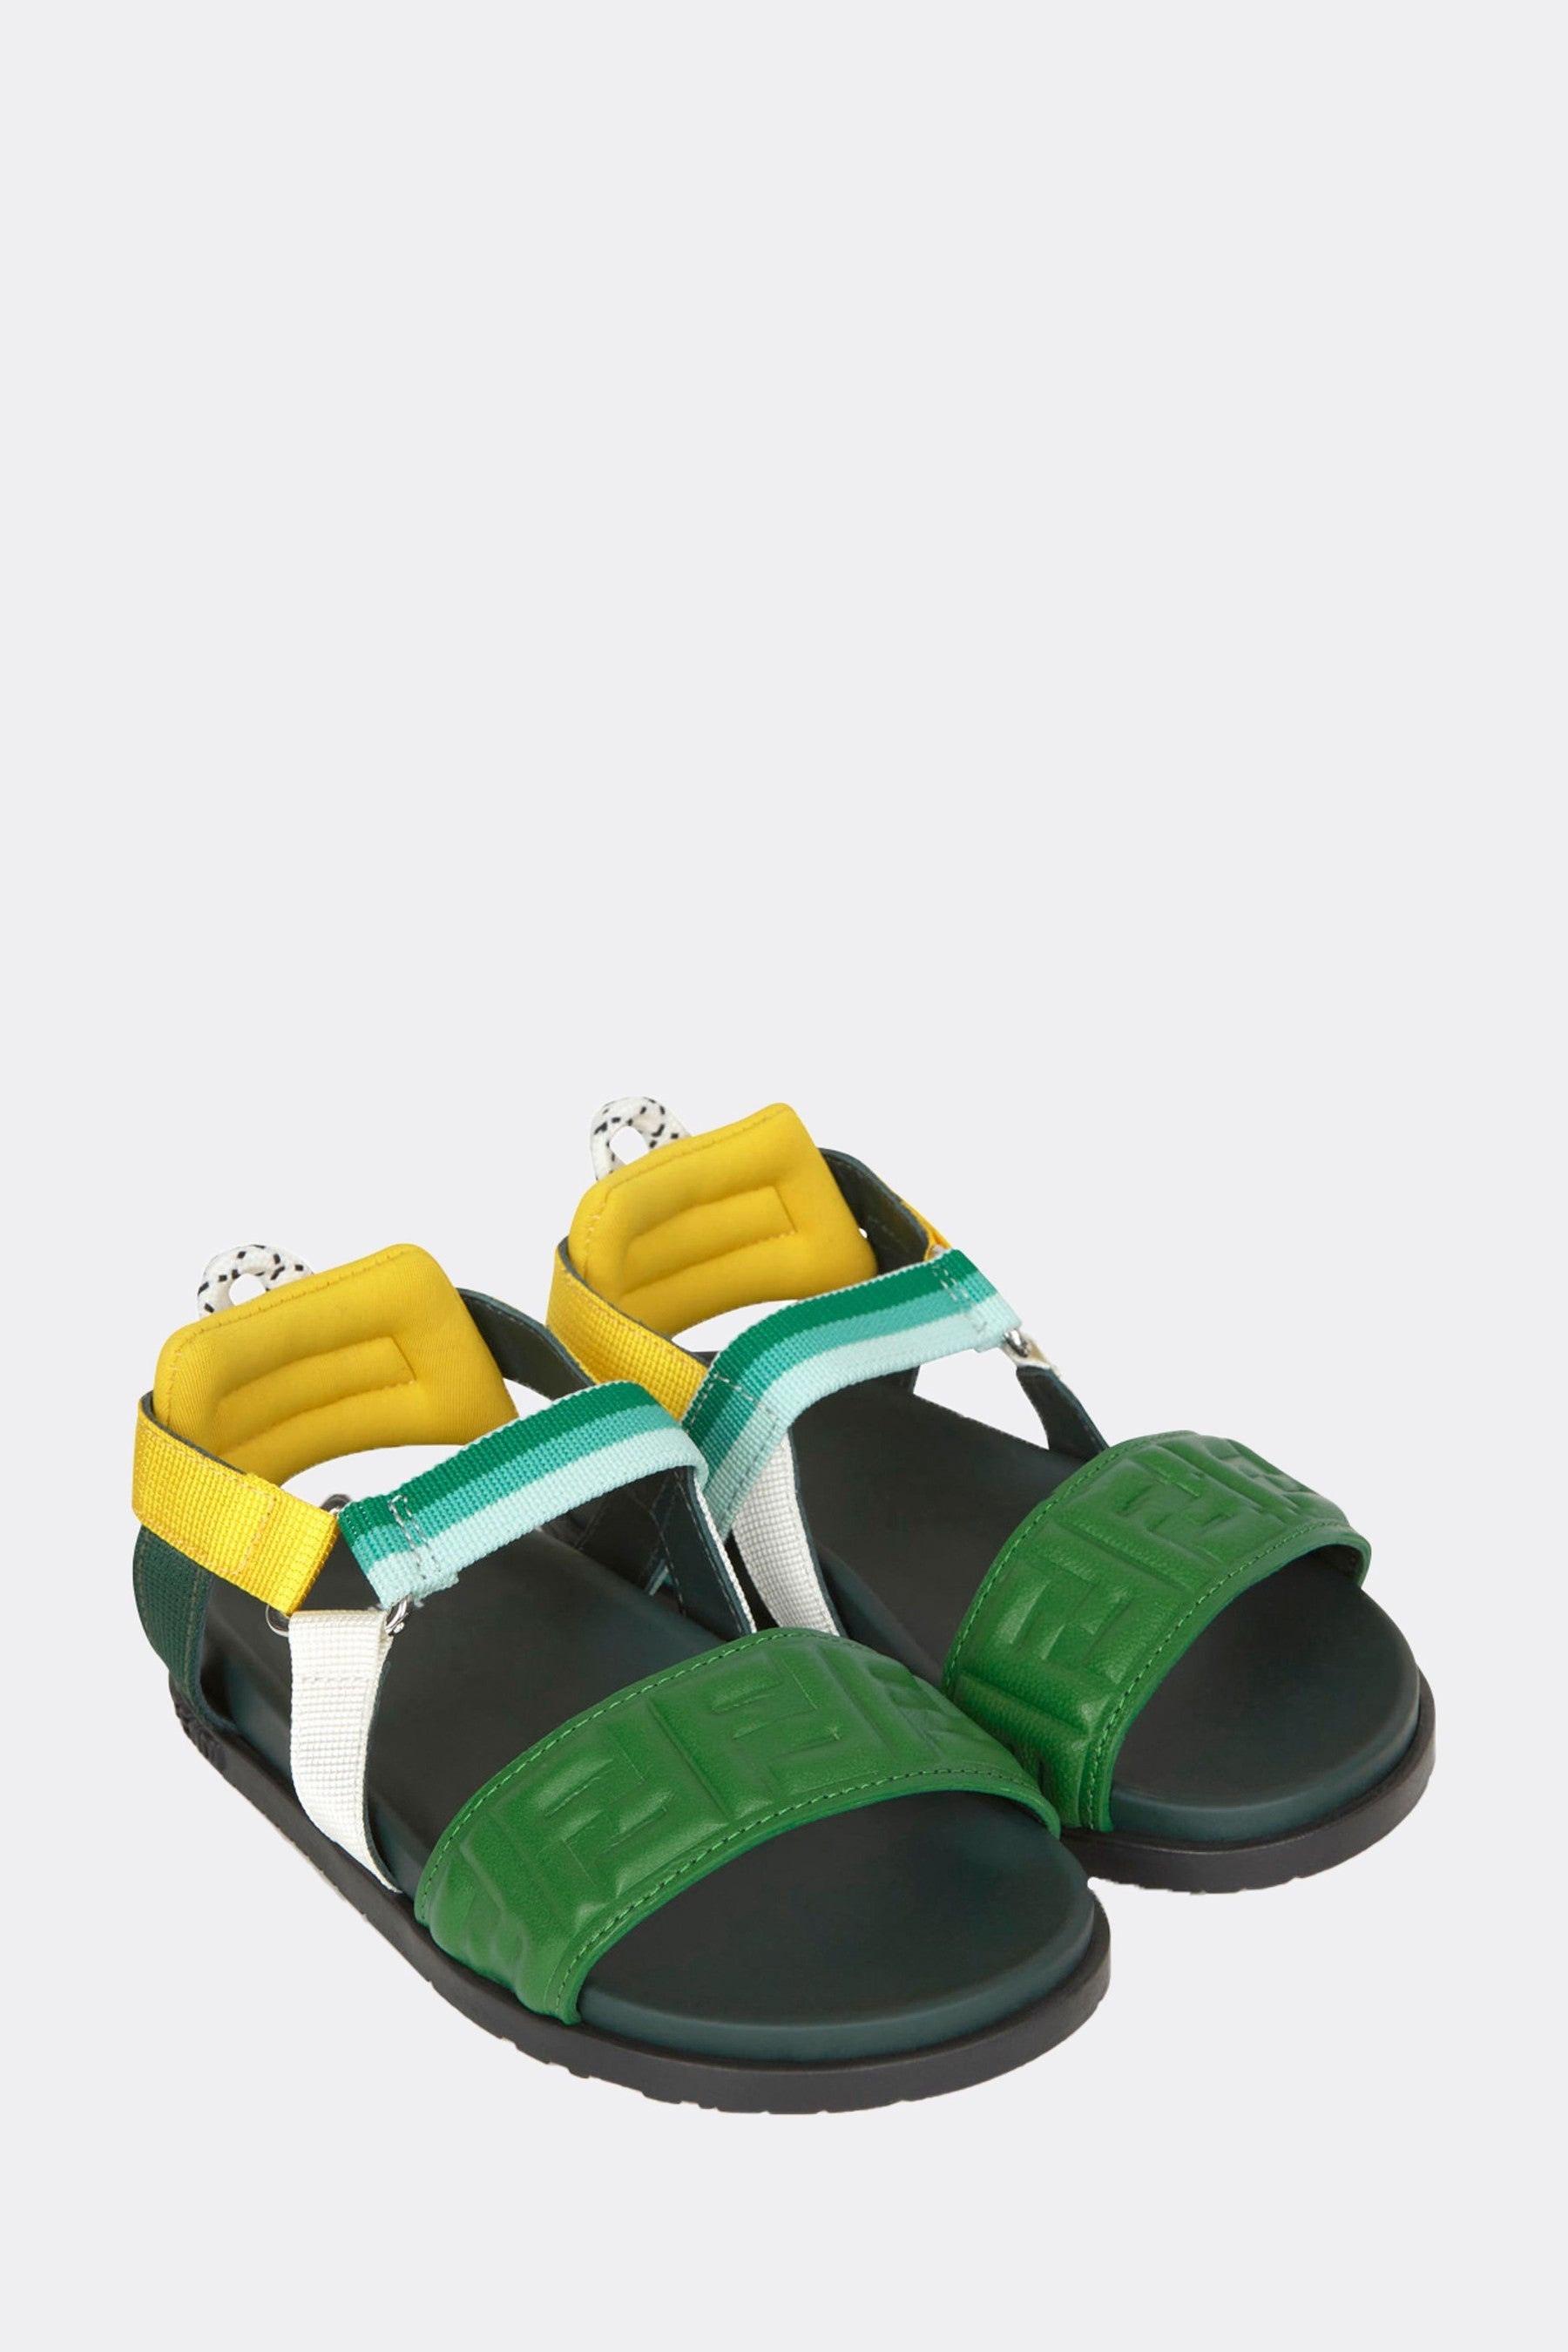 Fendi Babies' Girls Sandals Eu 19 Uk 3 Green